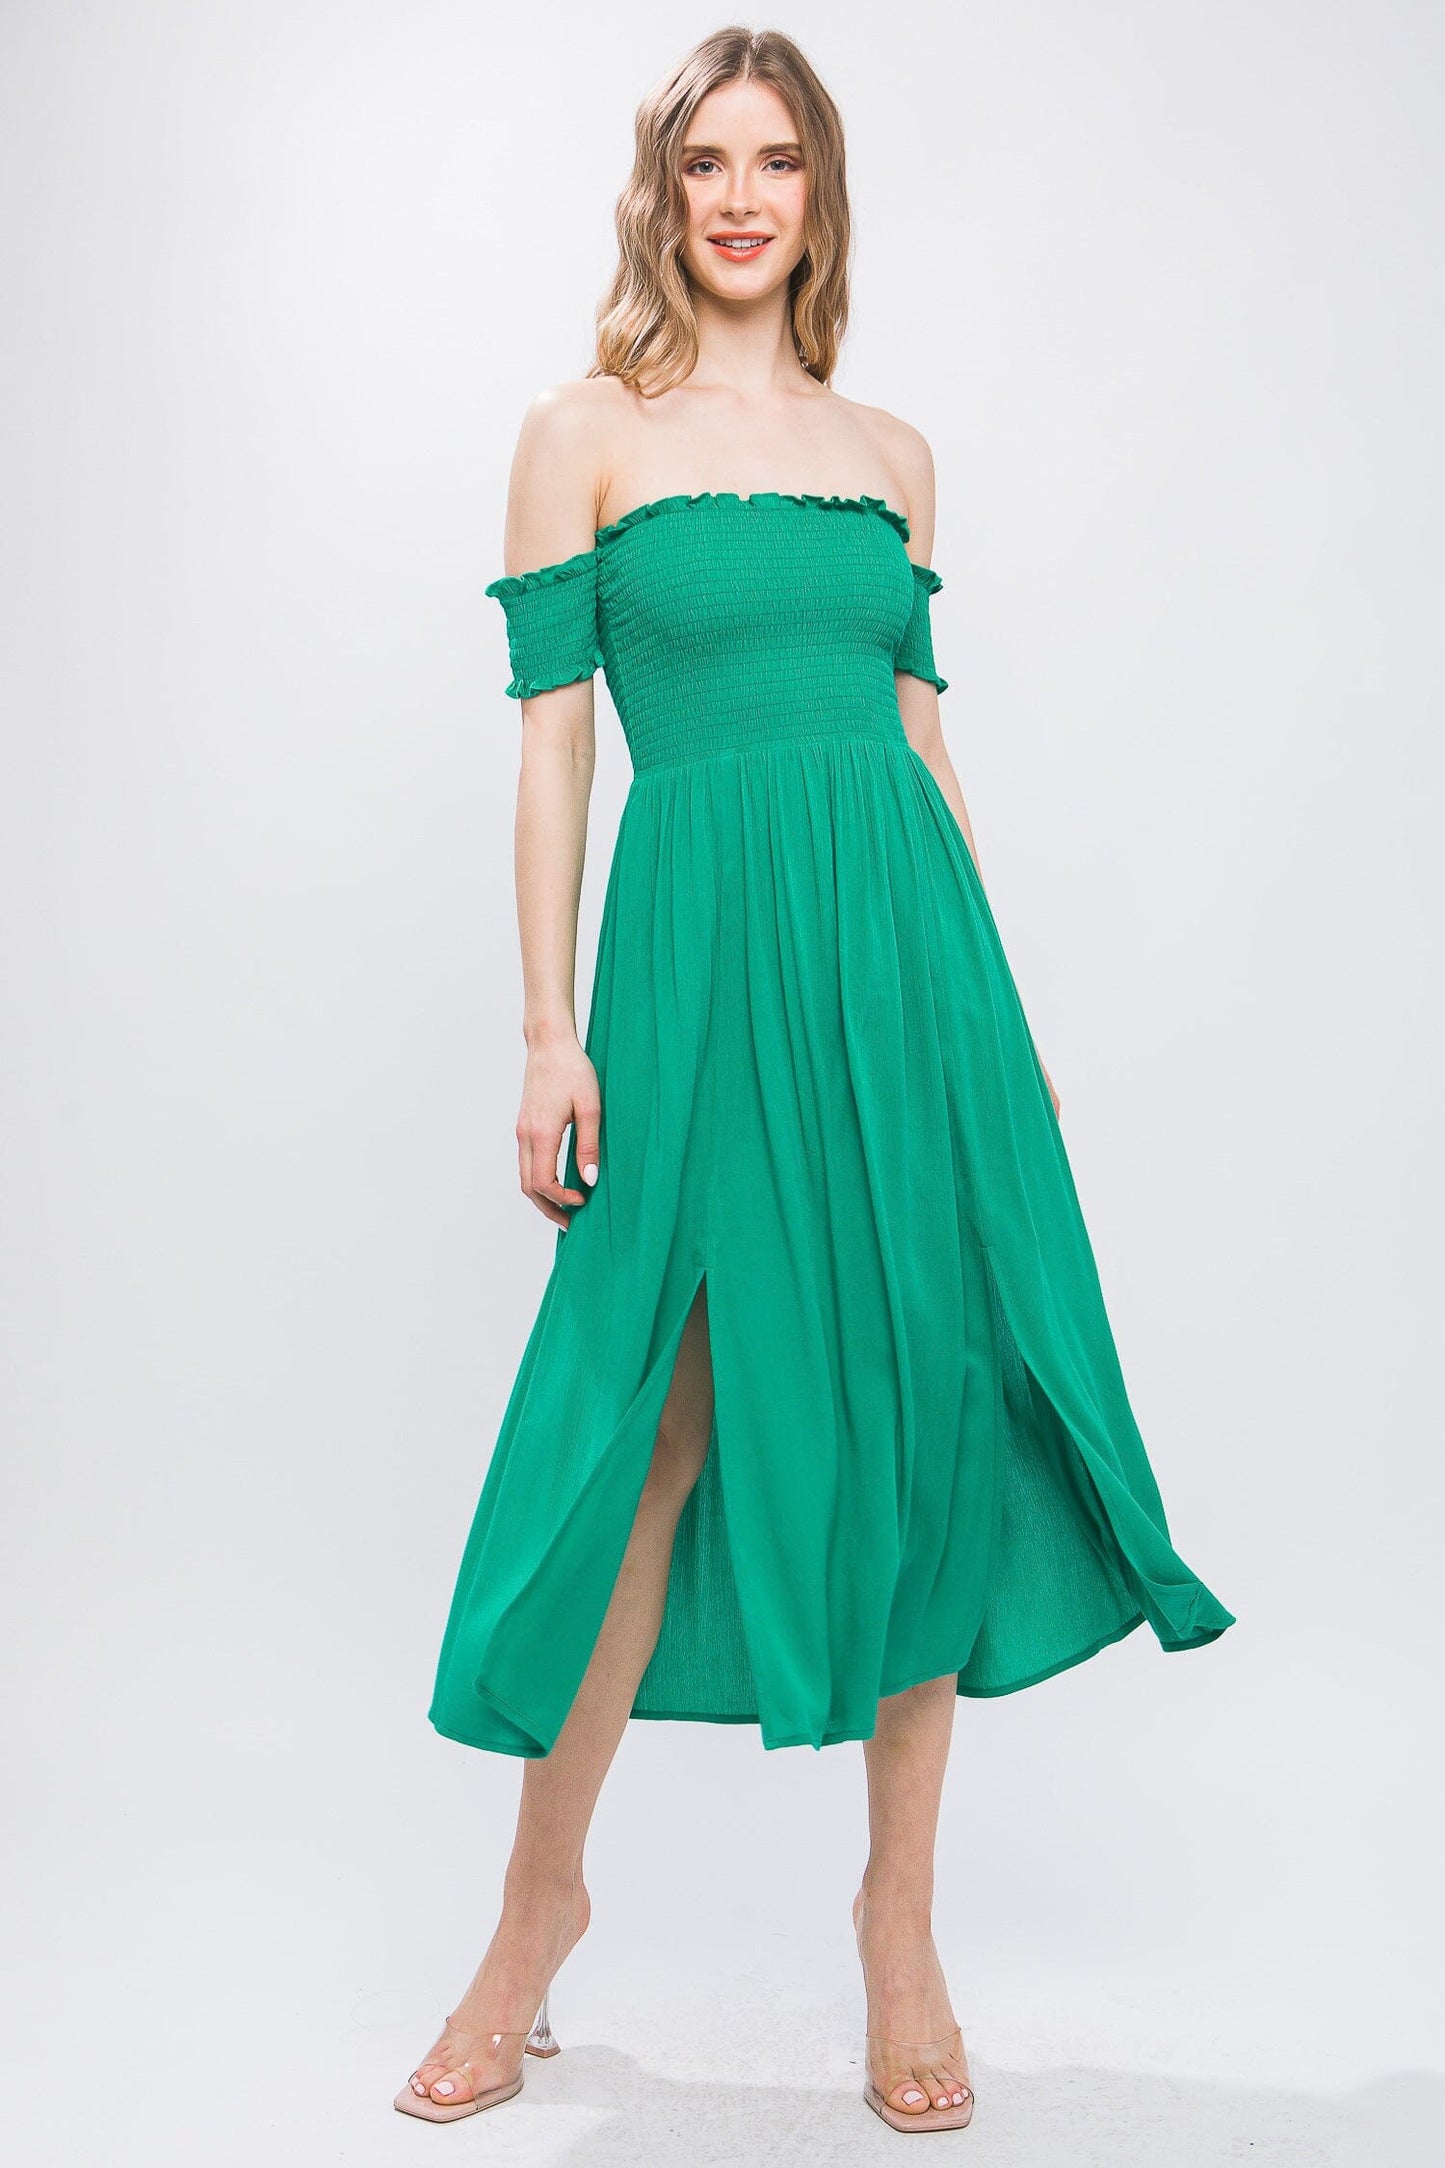 Green Flowy Off The Shoulder Side Slit Midi Dress Dresses jehouze S 